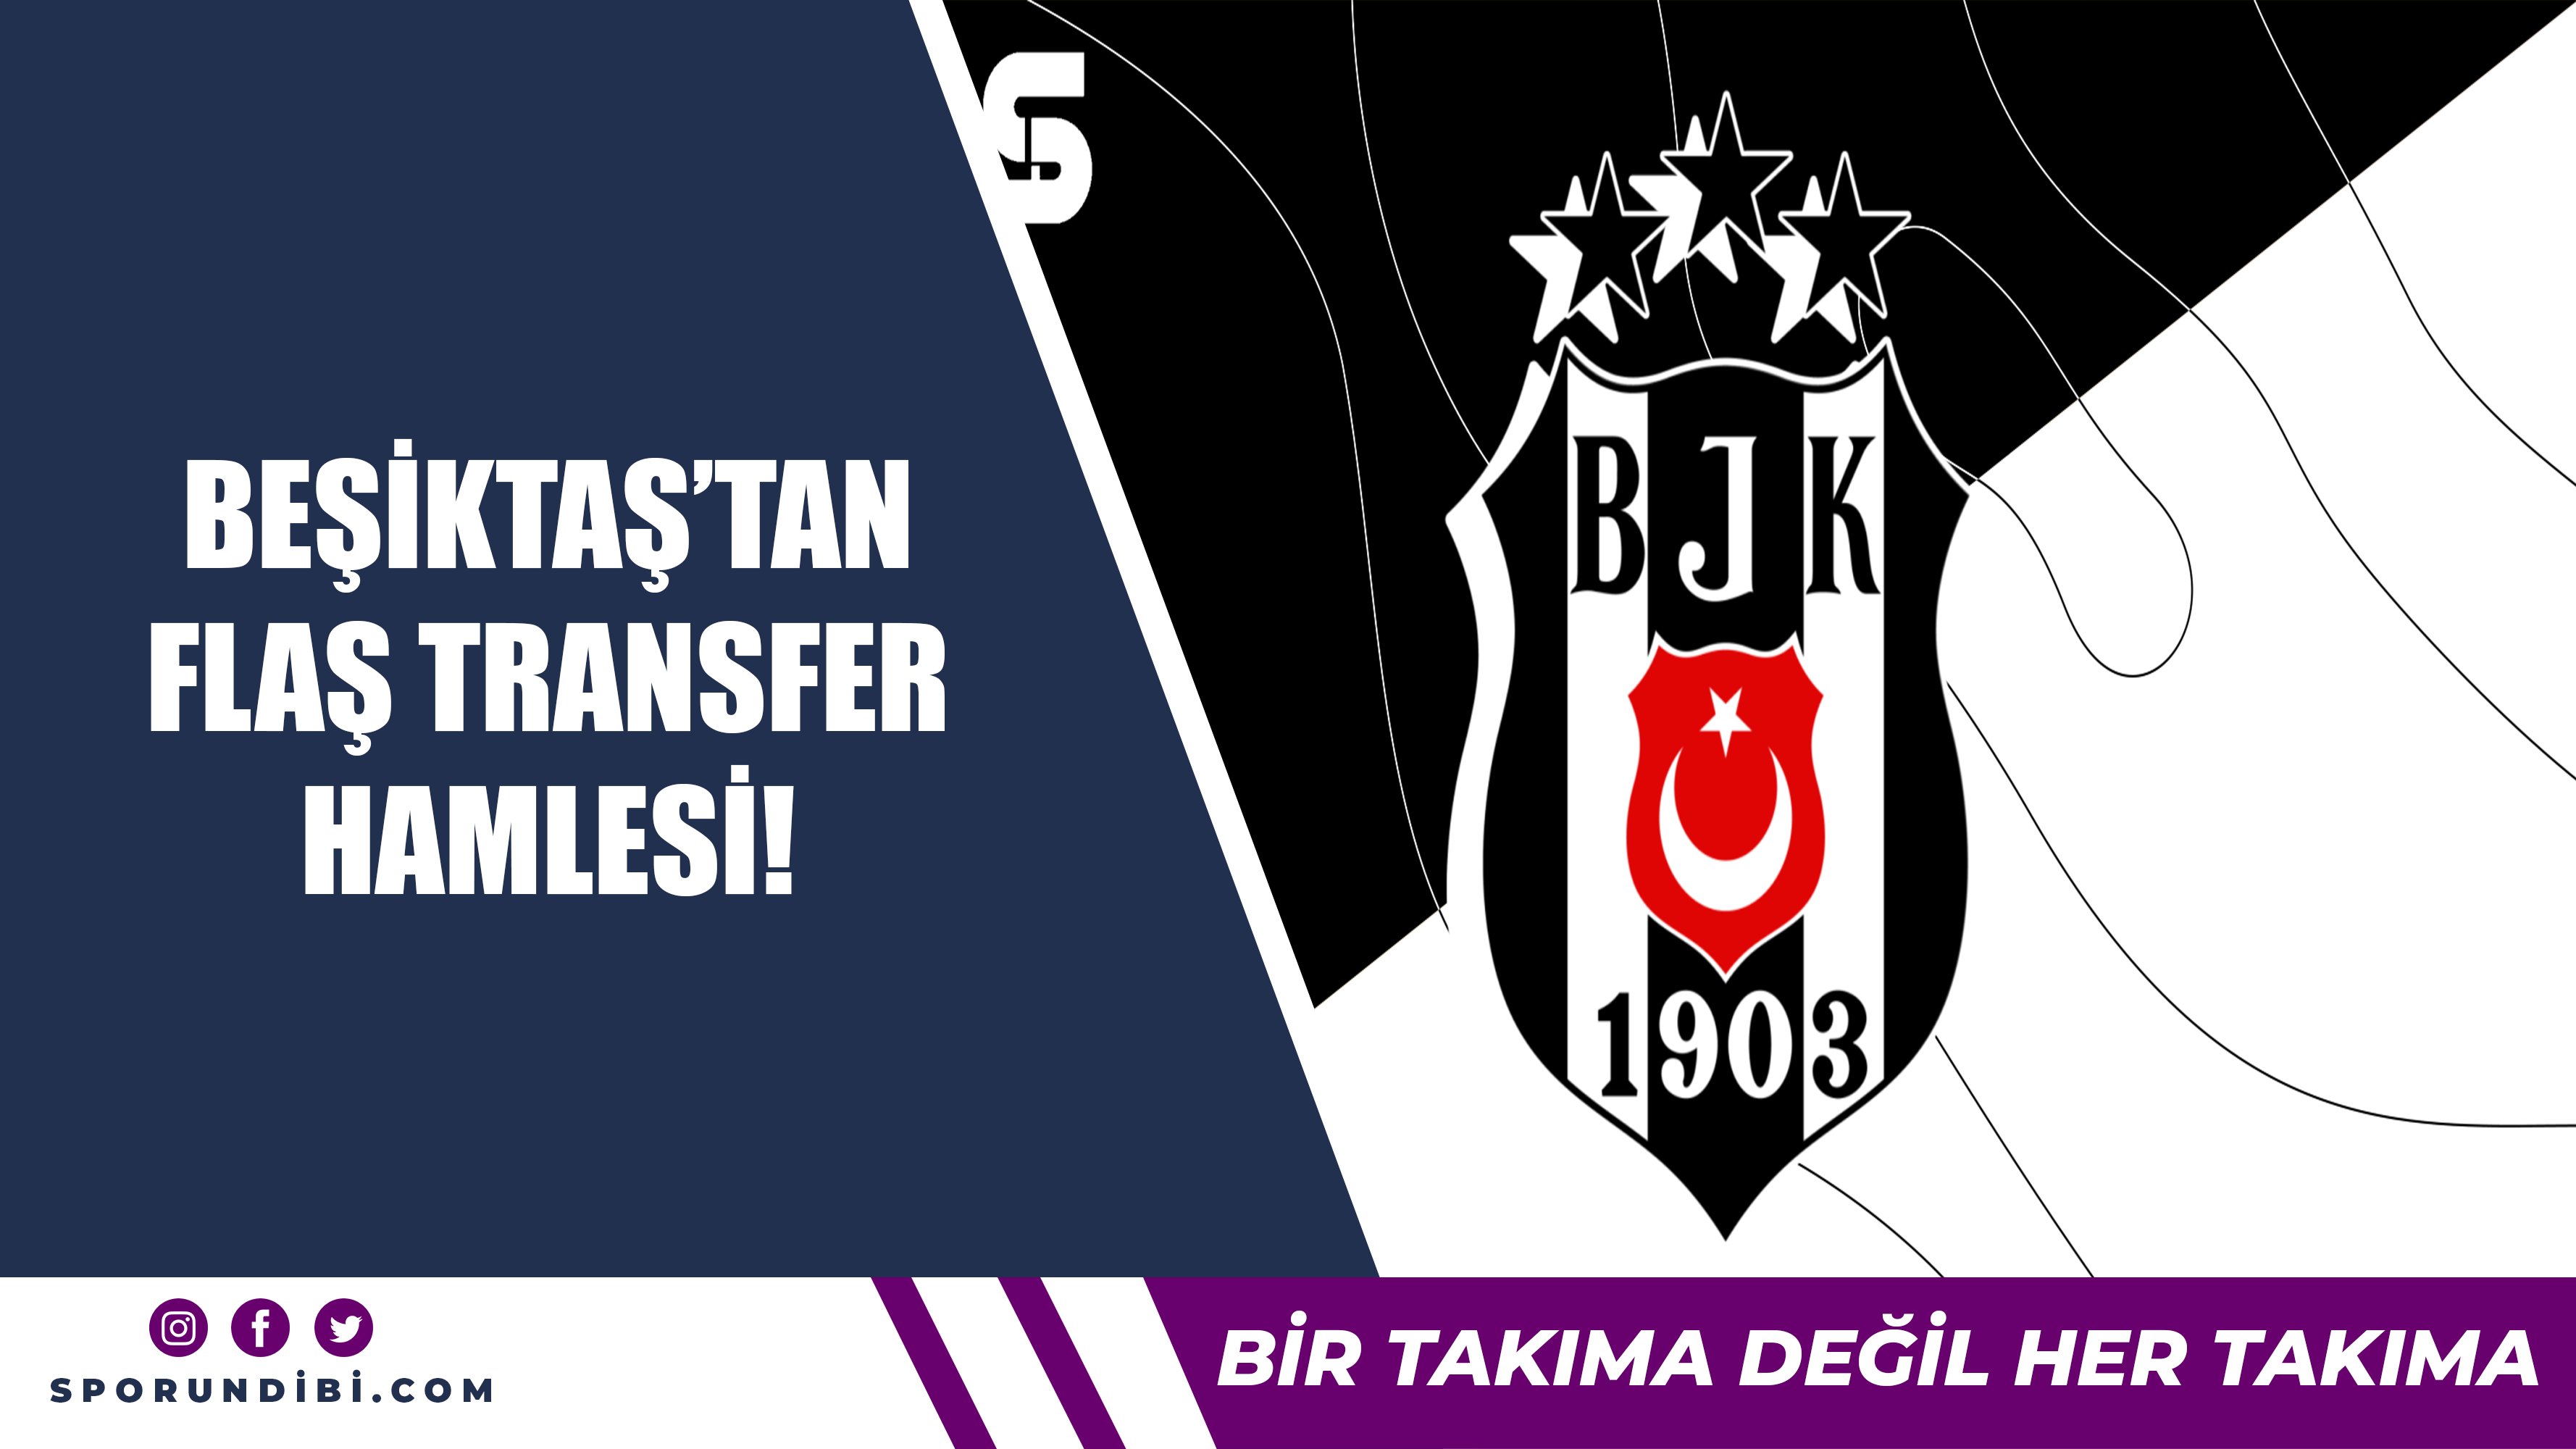 Beşiktaş'tan flaş transfer hamlesi!